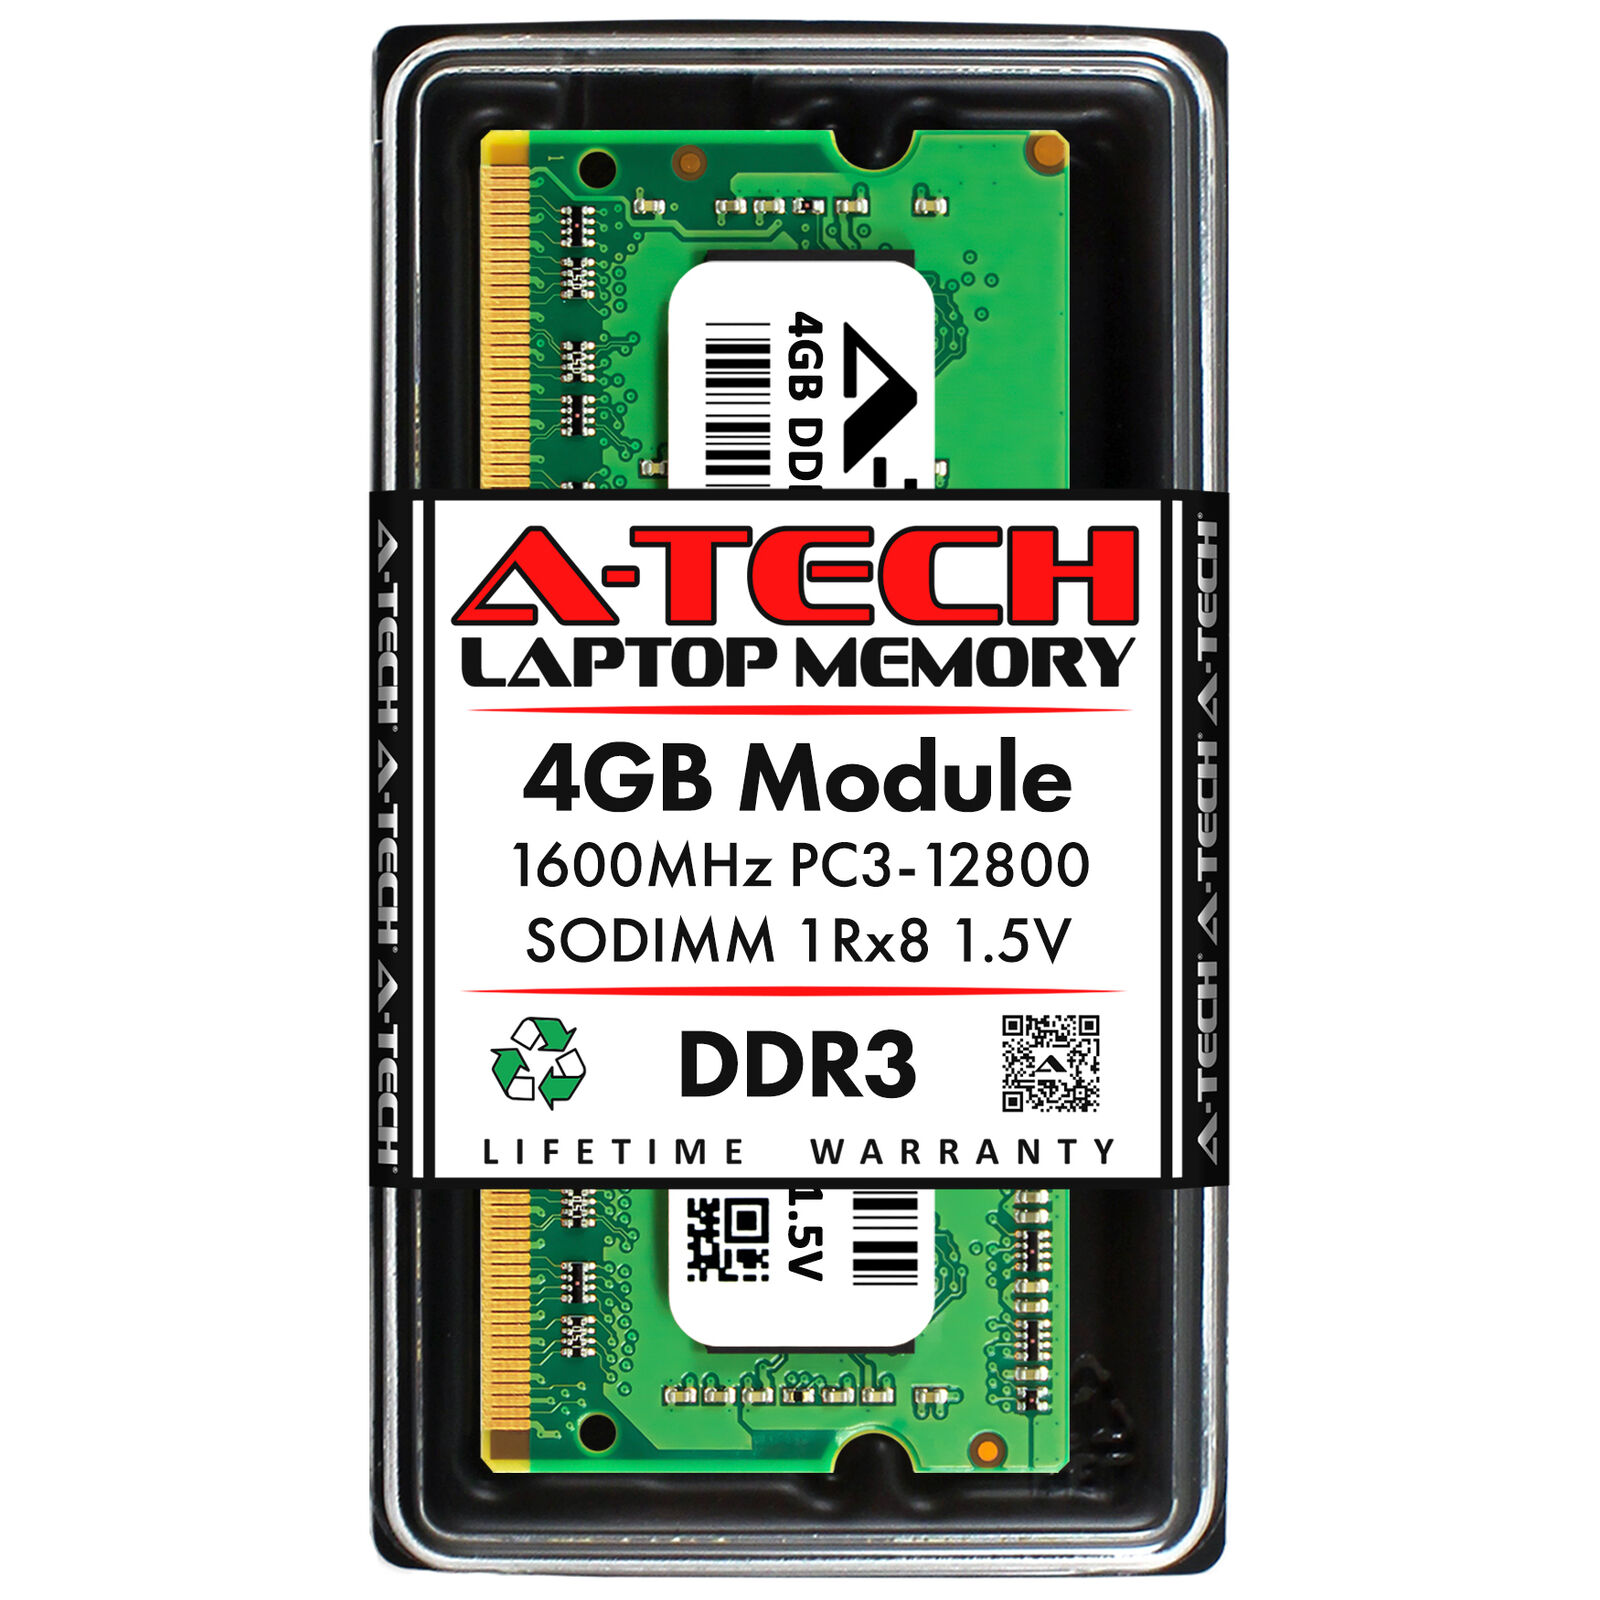 4GB DDR3 PC3-12800 1600MHz SODIMM (FUJITSU FPCEM760AP Equivalent) Memory RAM